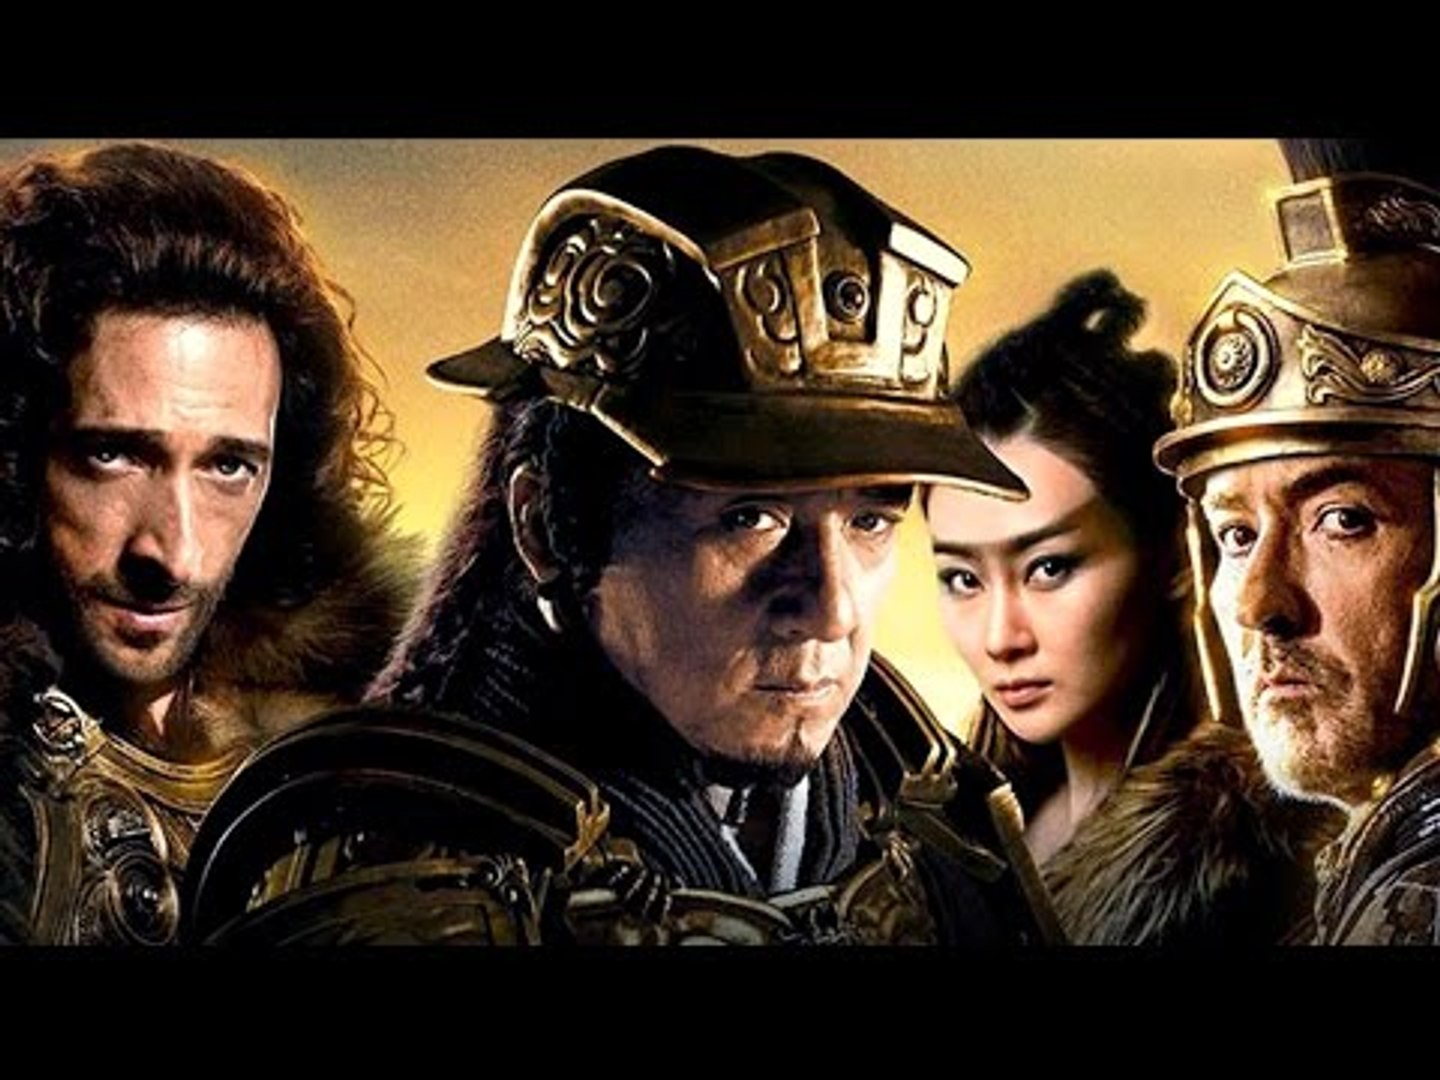 Dragon Blade' starring Jackie Chan, John Cusack & Adrien Brody – Yep, you  read that right – Reel News Daily